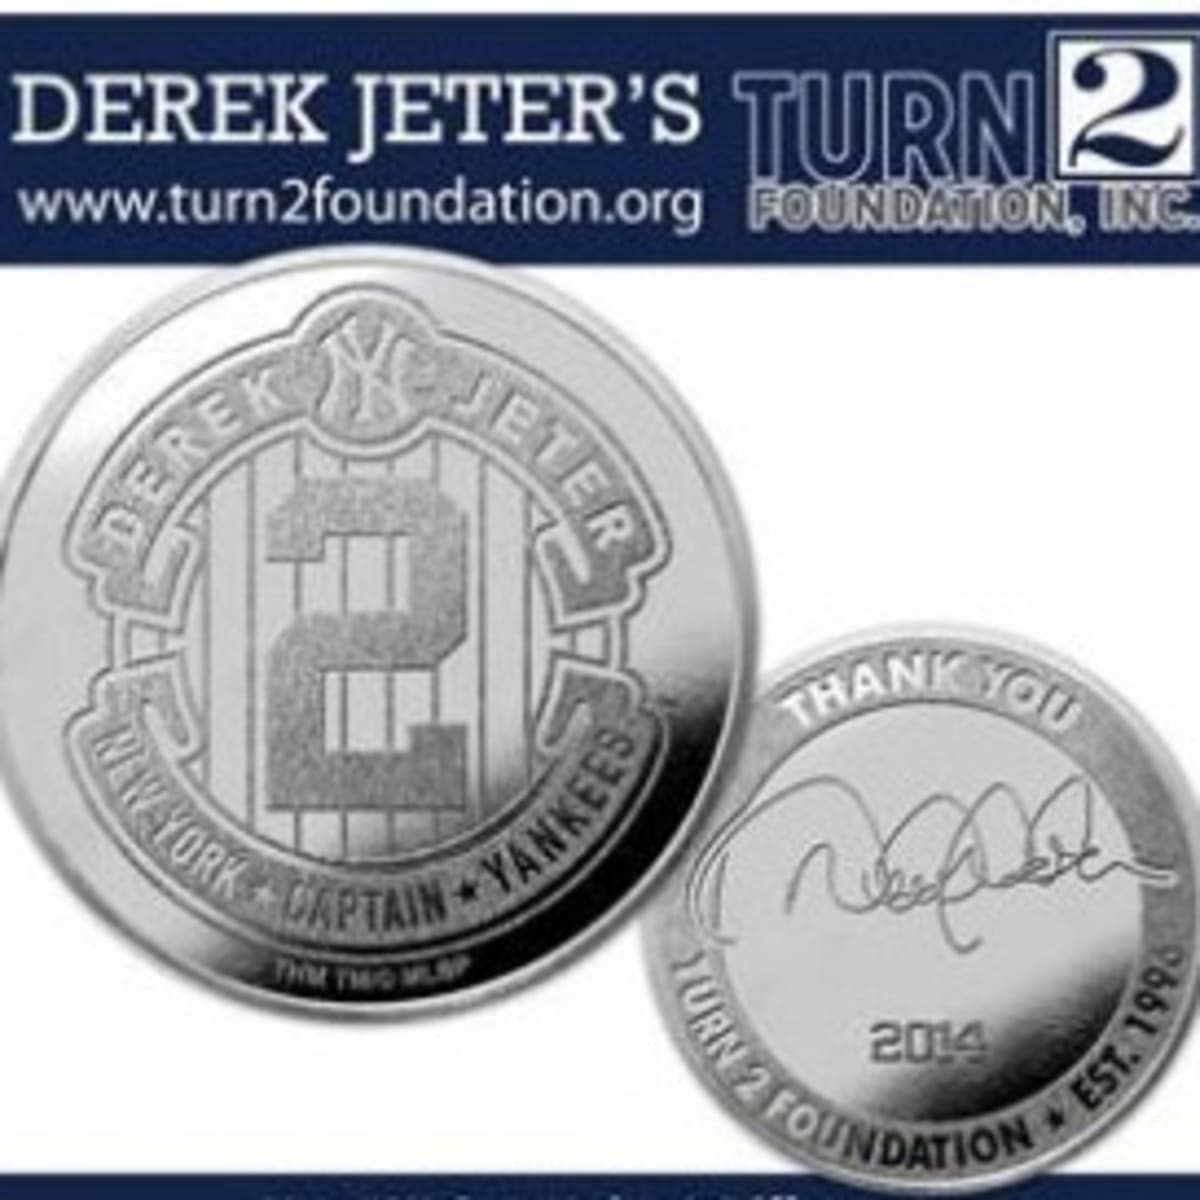 Highland Mint MLB New York Yankees Derek Jeter Hall of Fame